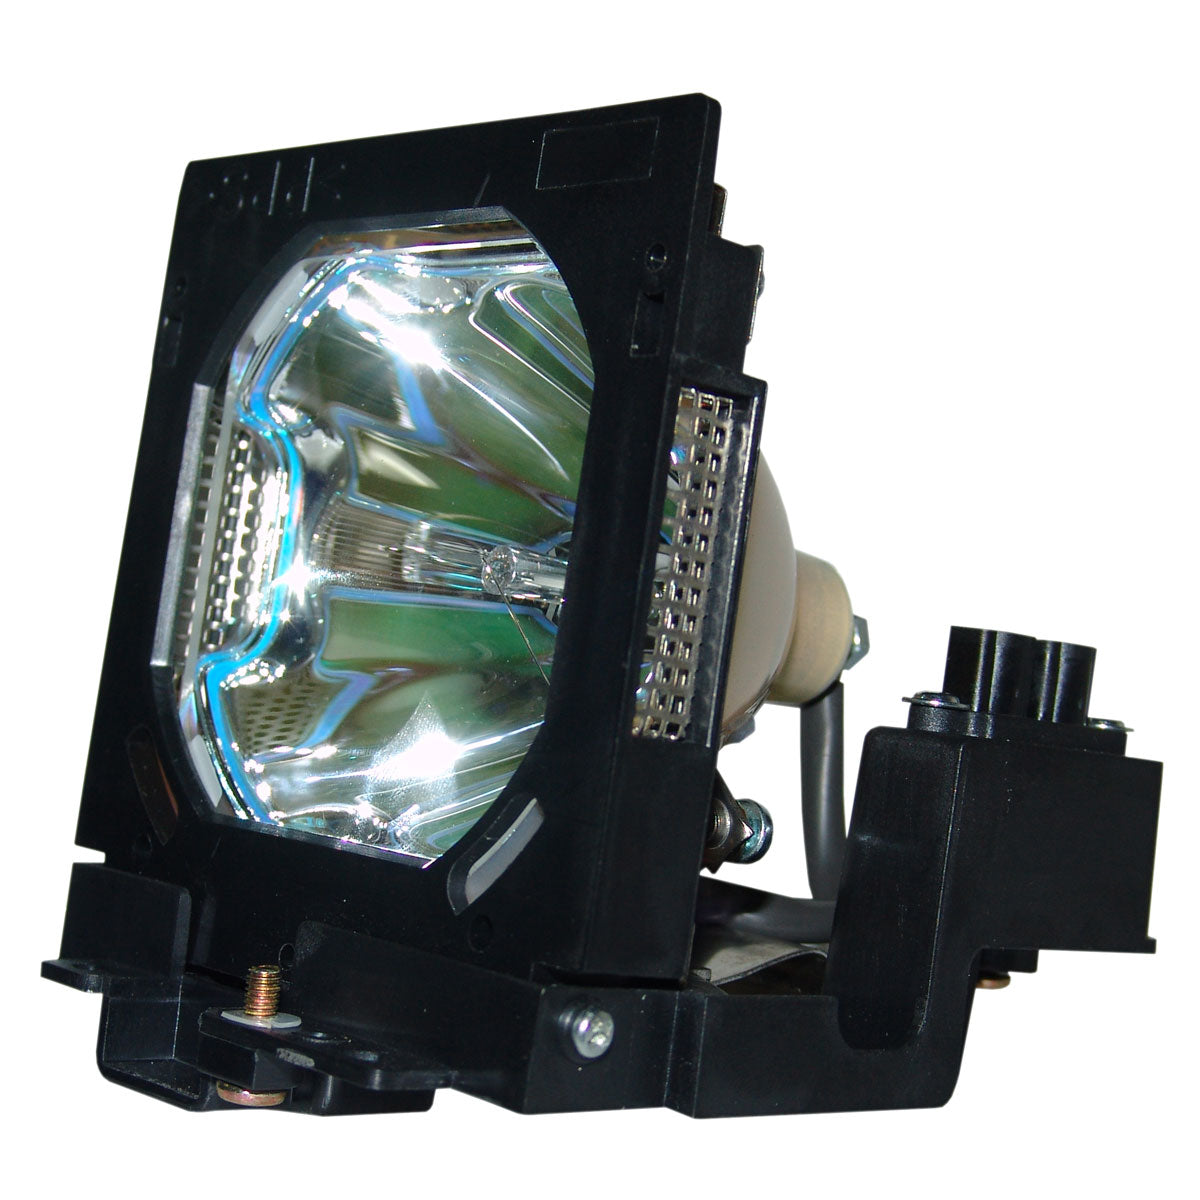 Sanyo POA-LLB02 Philips Projector Lamp Module